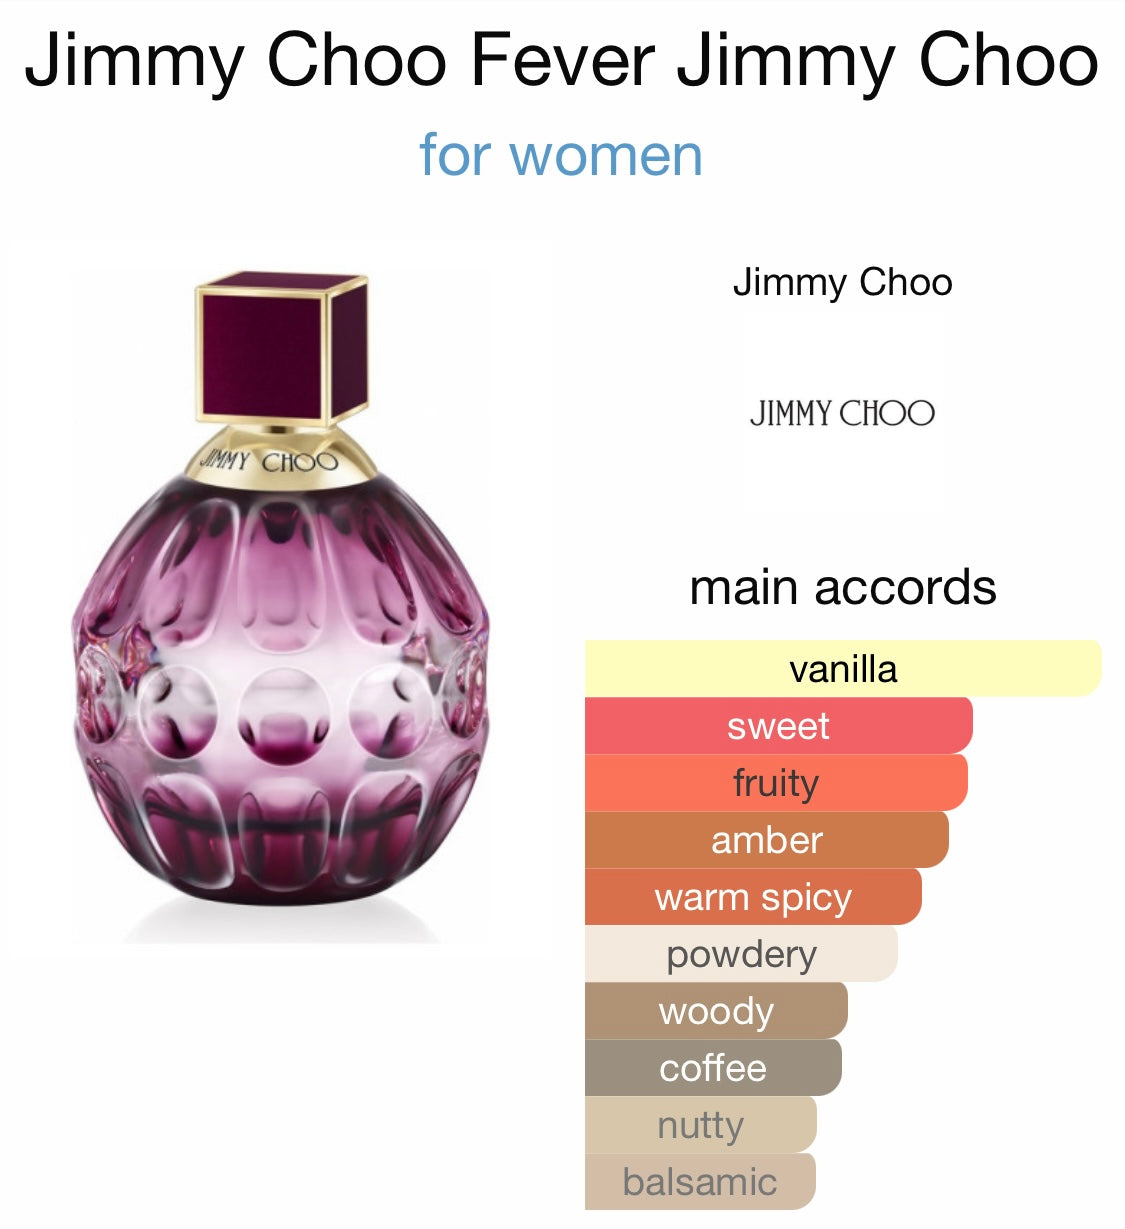 Jimmy Choo Fever Perfume - Women's EDP